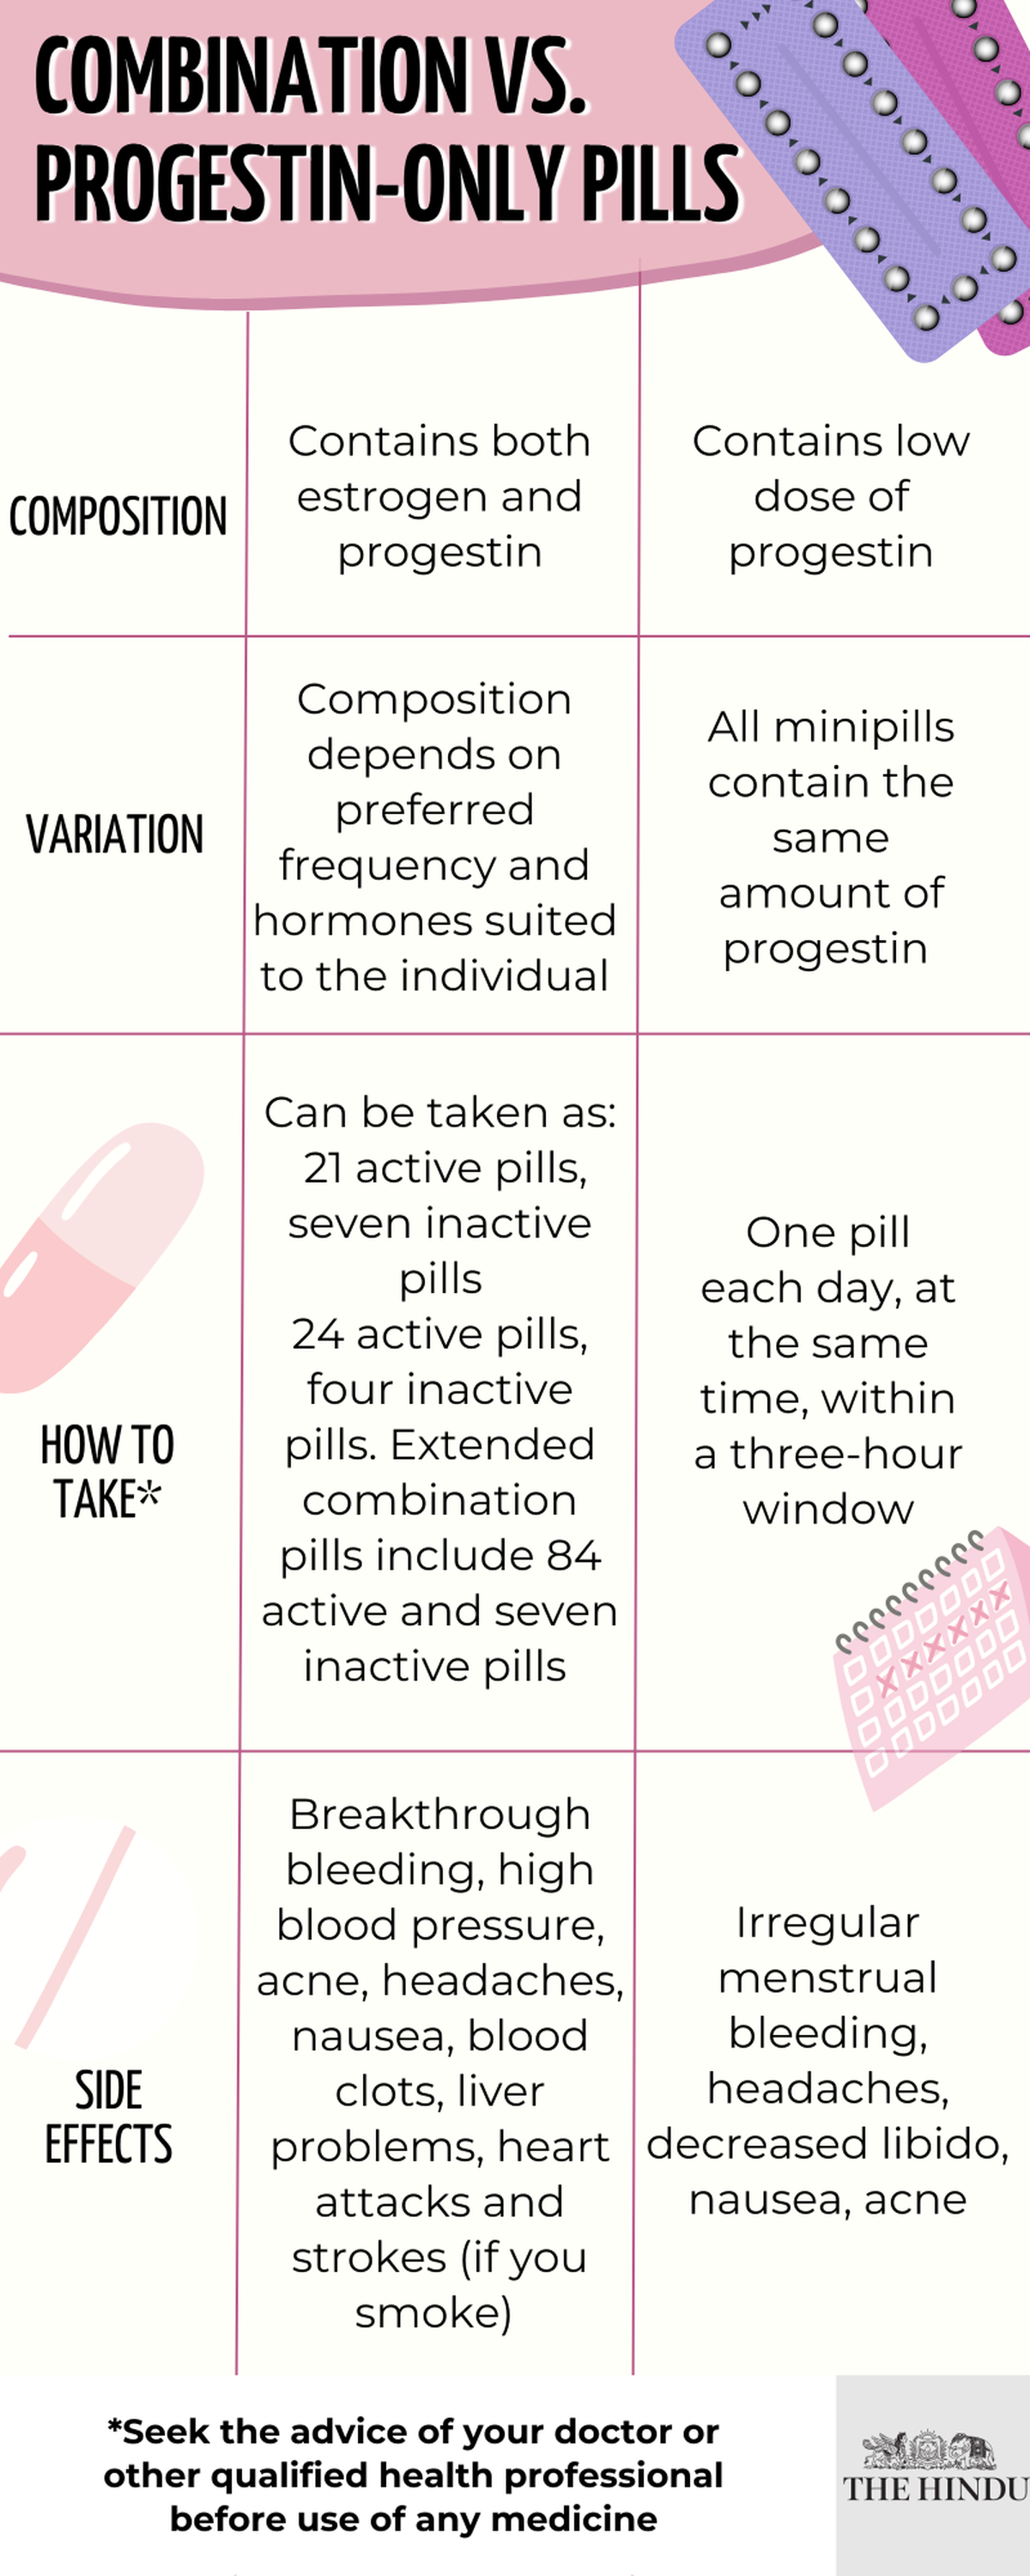 Vaginal and Transdermal Estrogen-Progestin Contraception | Obgyn Key